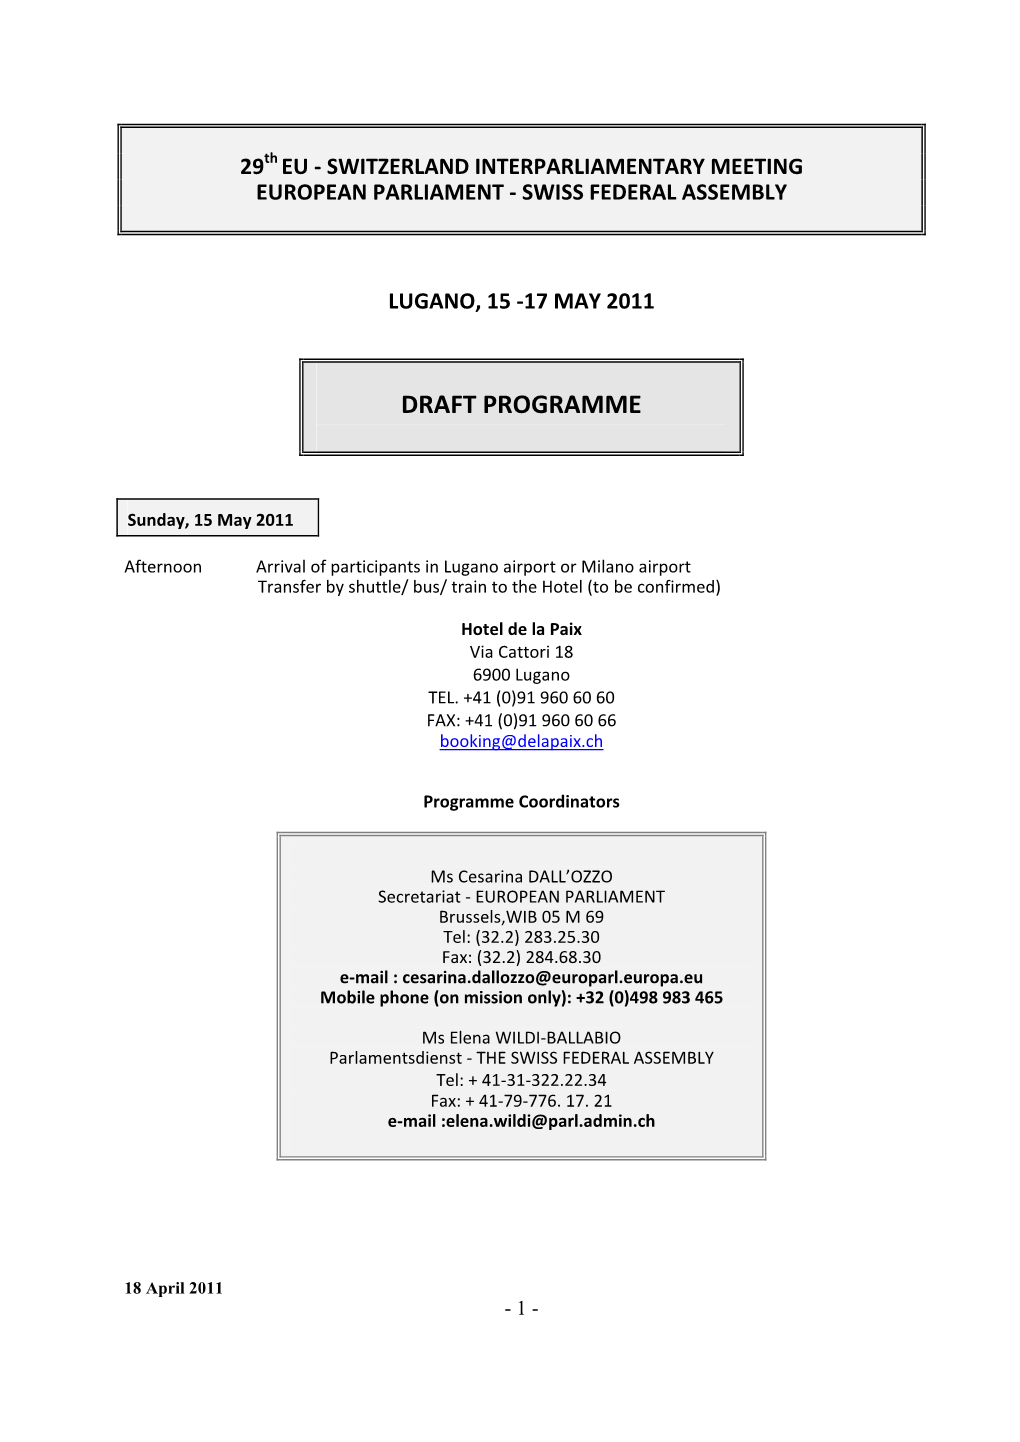 Programme29th EU-CH IPM Lugano2011